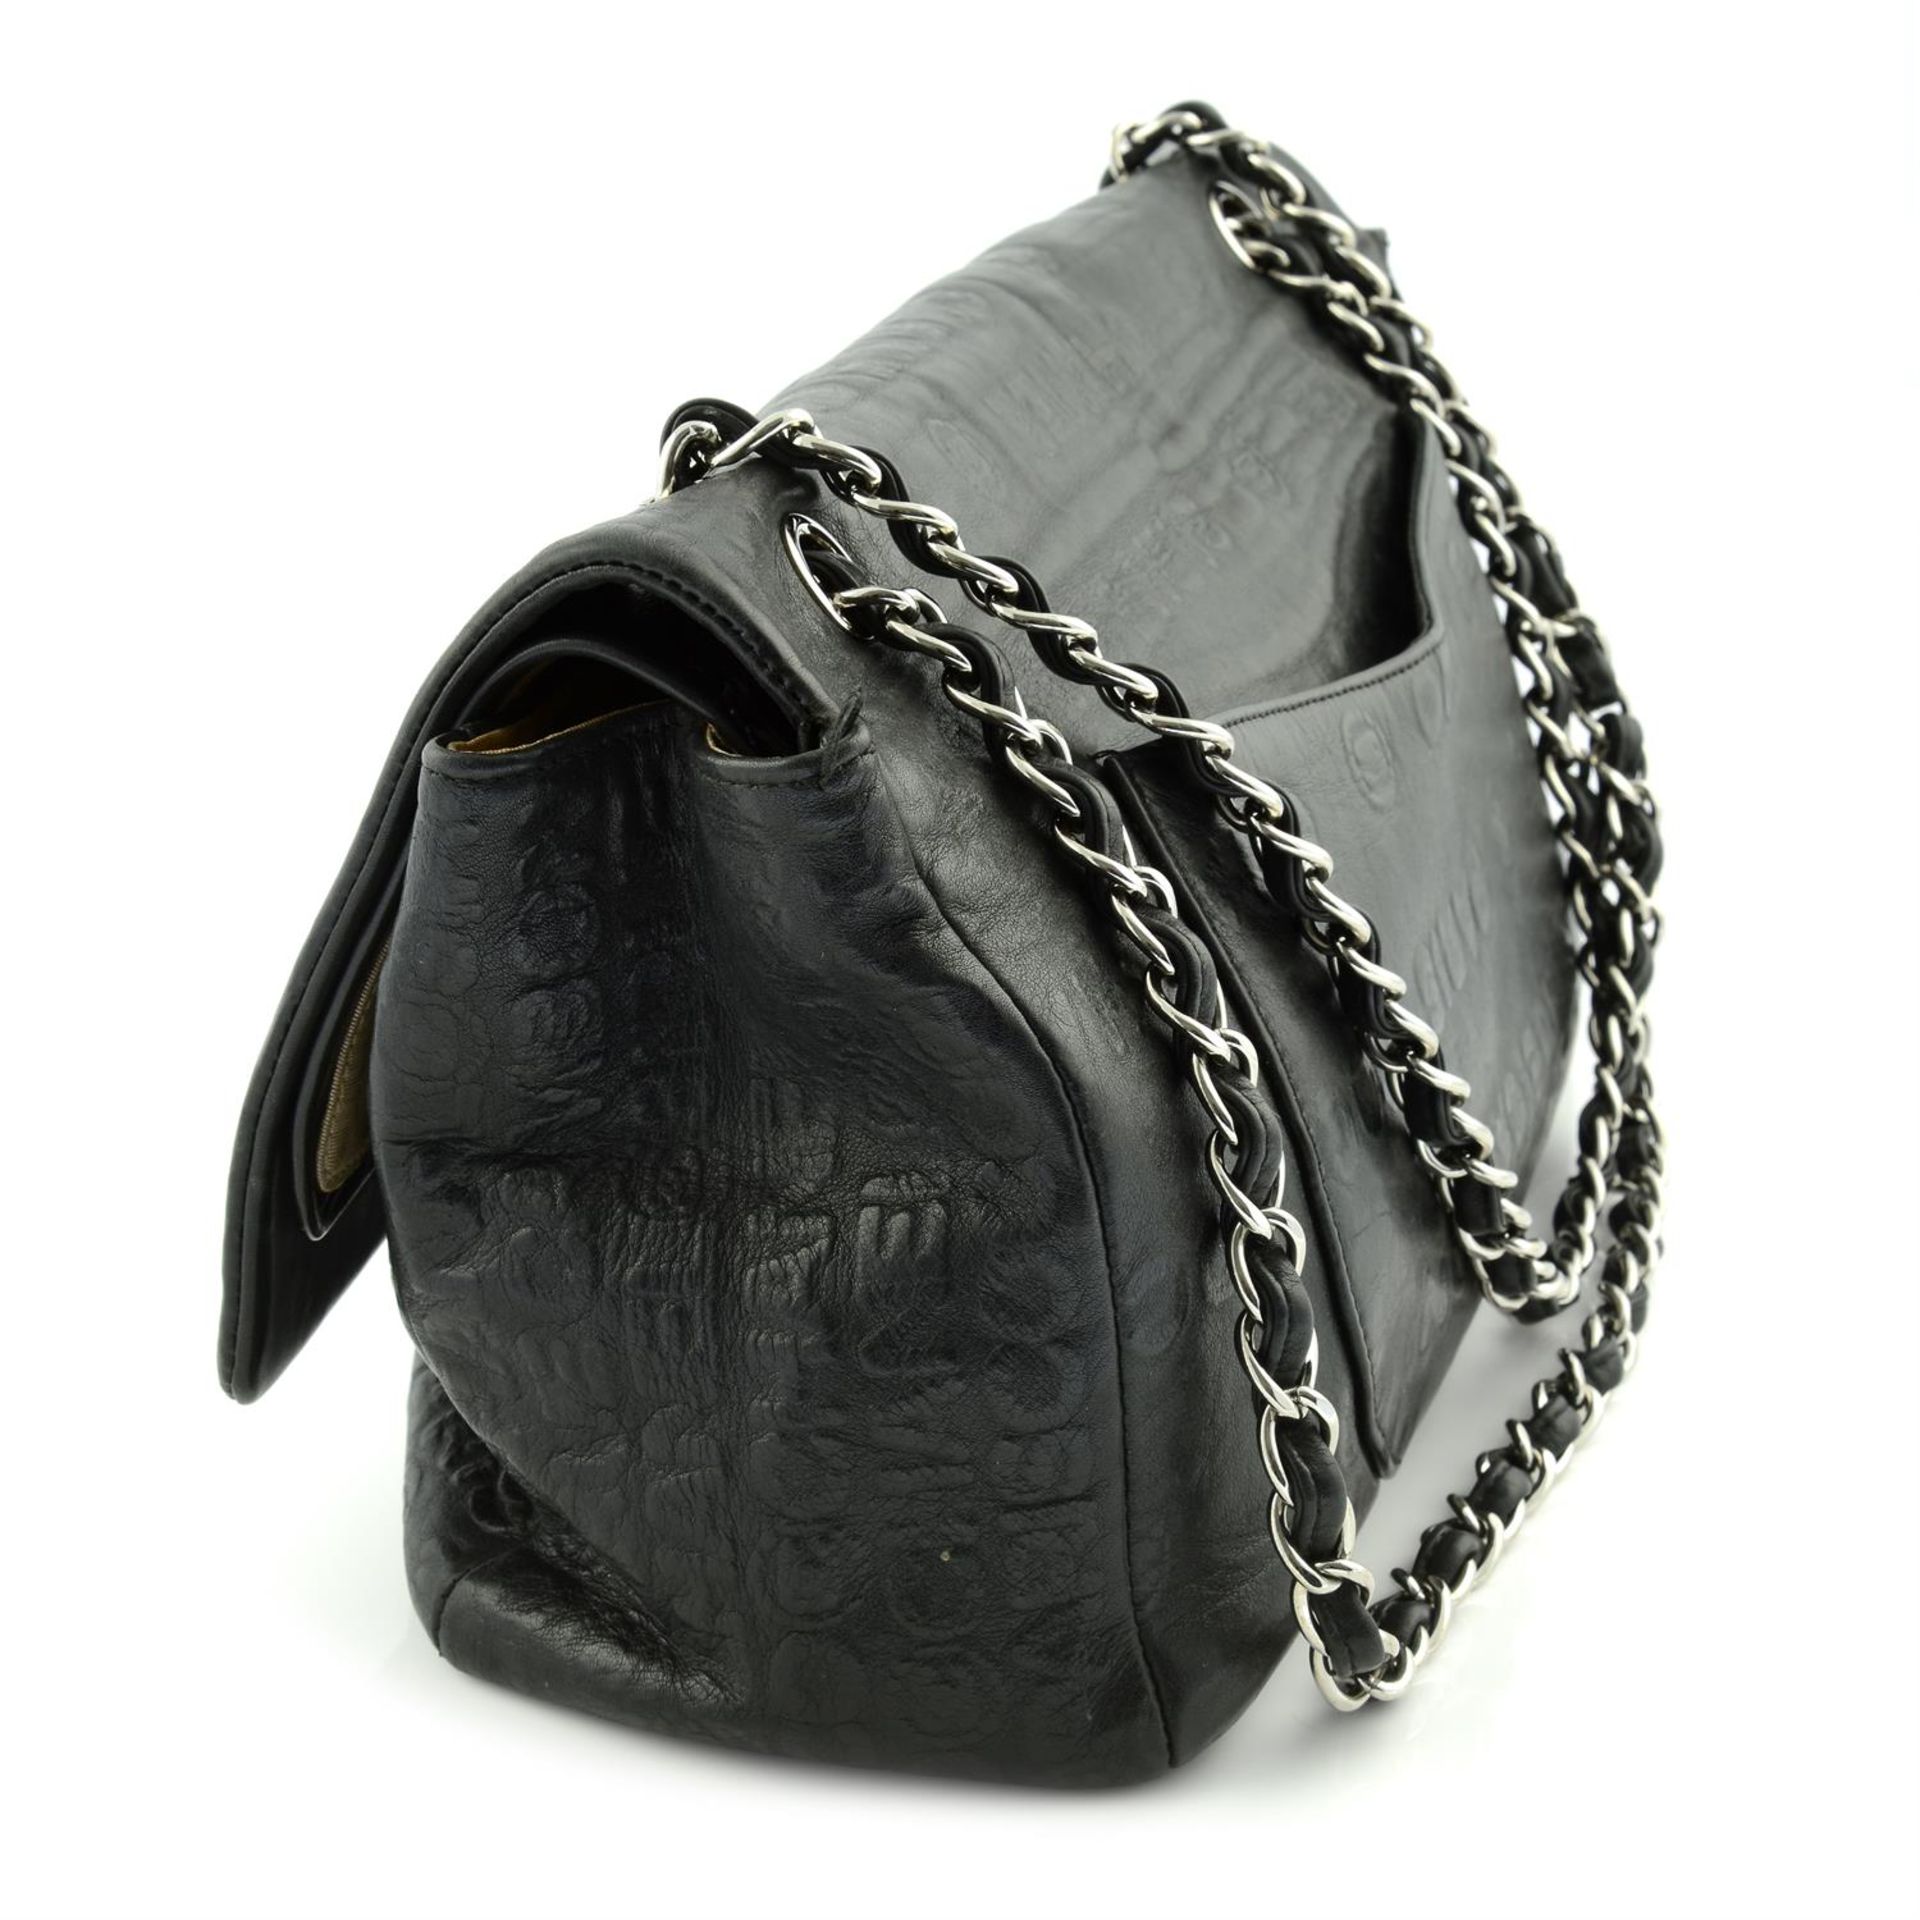 CHANEL - a black lambskin "31 Rue Cambon Paris" Reissue 2.55 double flap handbag. - Image 3 of 5